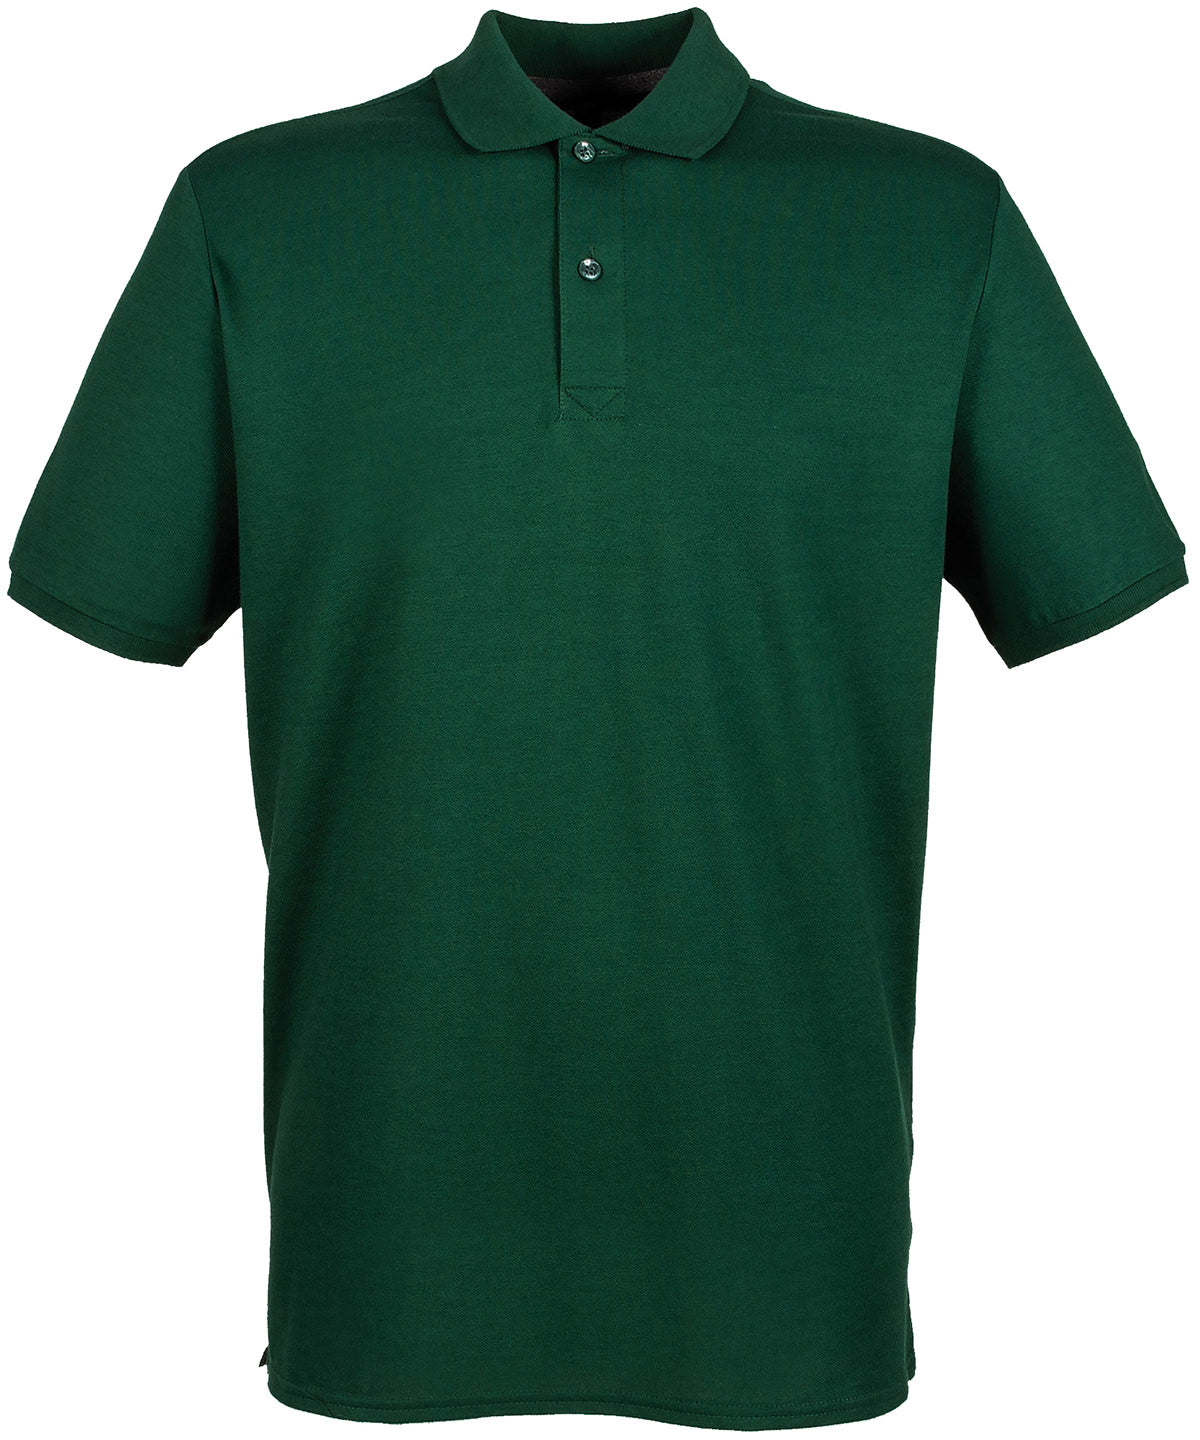 Personalised Polo Shirts - Navy Henbury Micro-fine piqué polo shirt